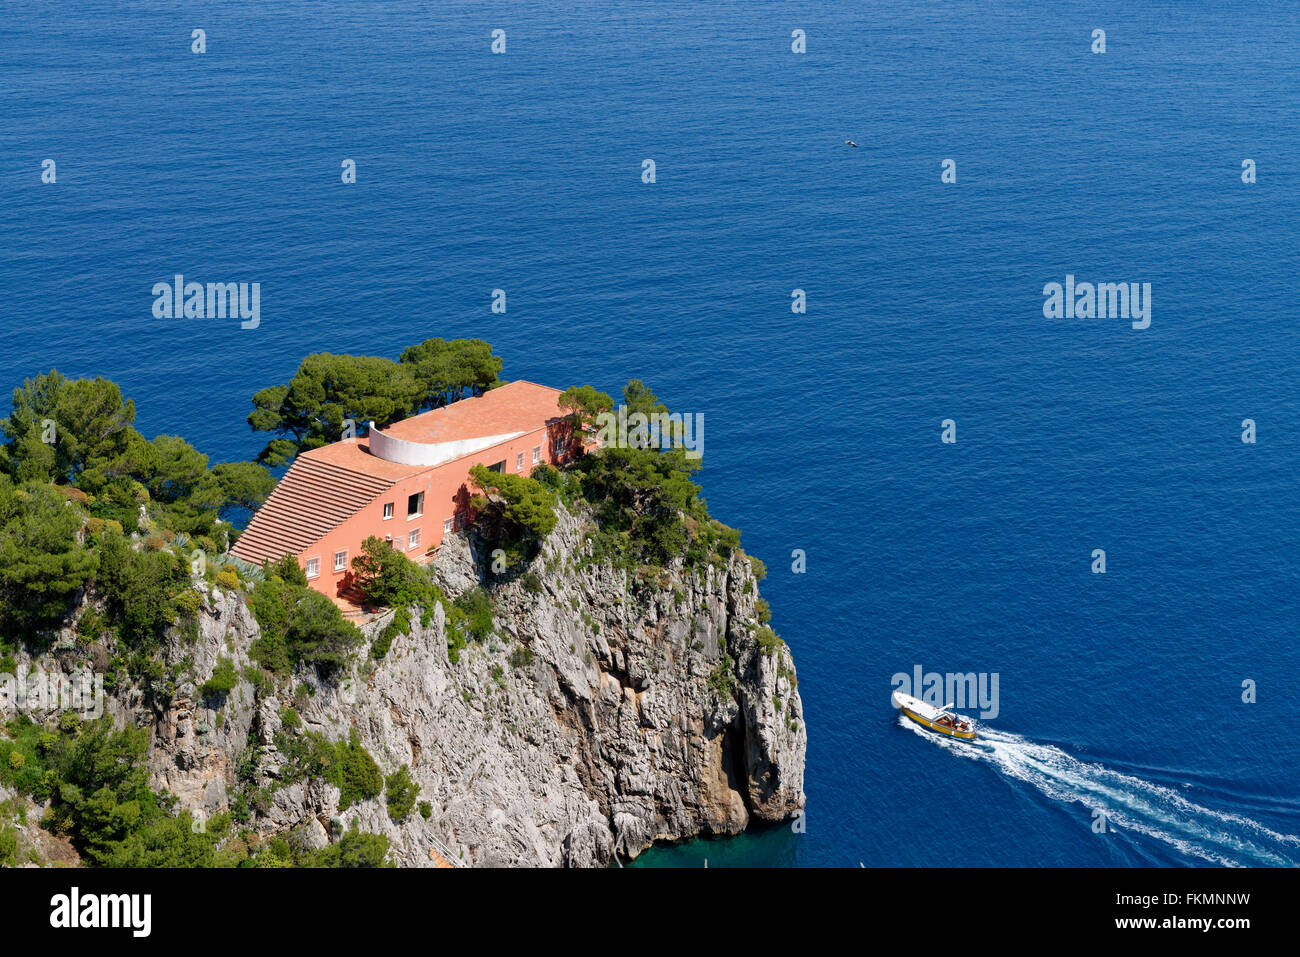 Villa Malaparte, Punta Massullo, Capri, Golf von Neapel, Kampanien, Italien Stockfoto